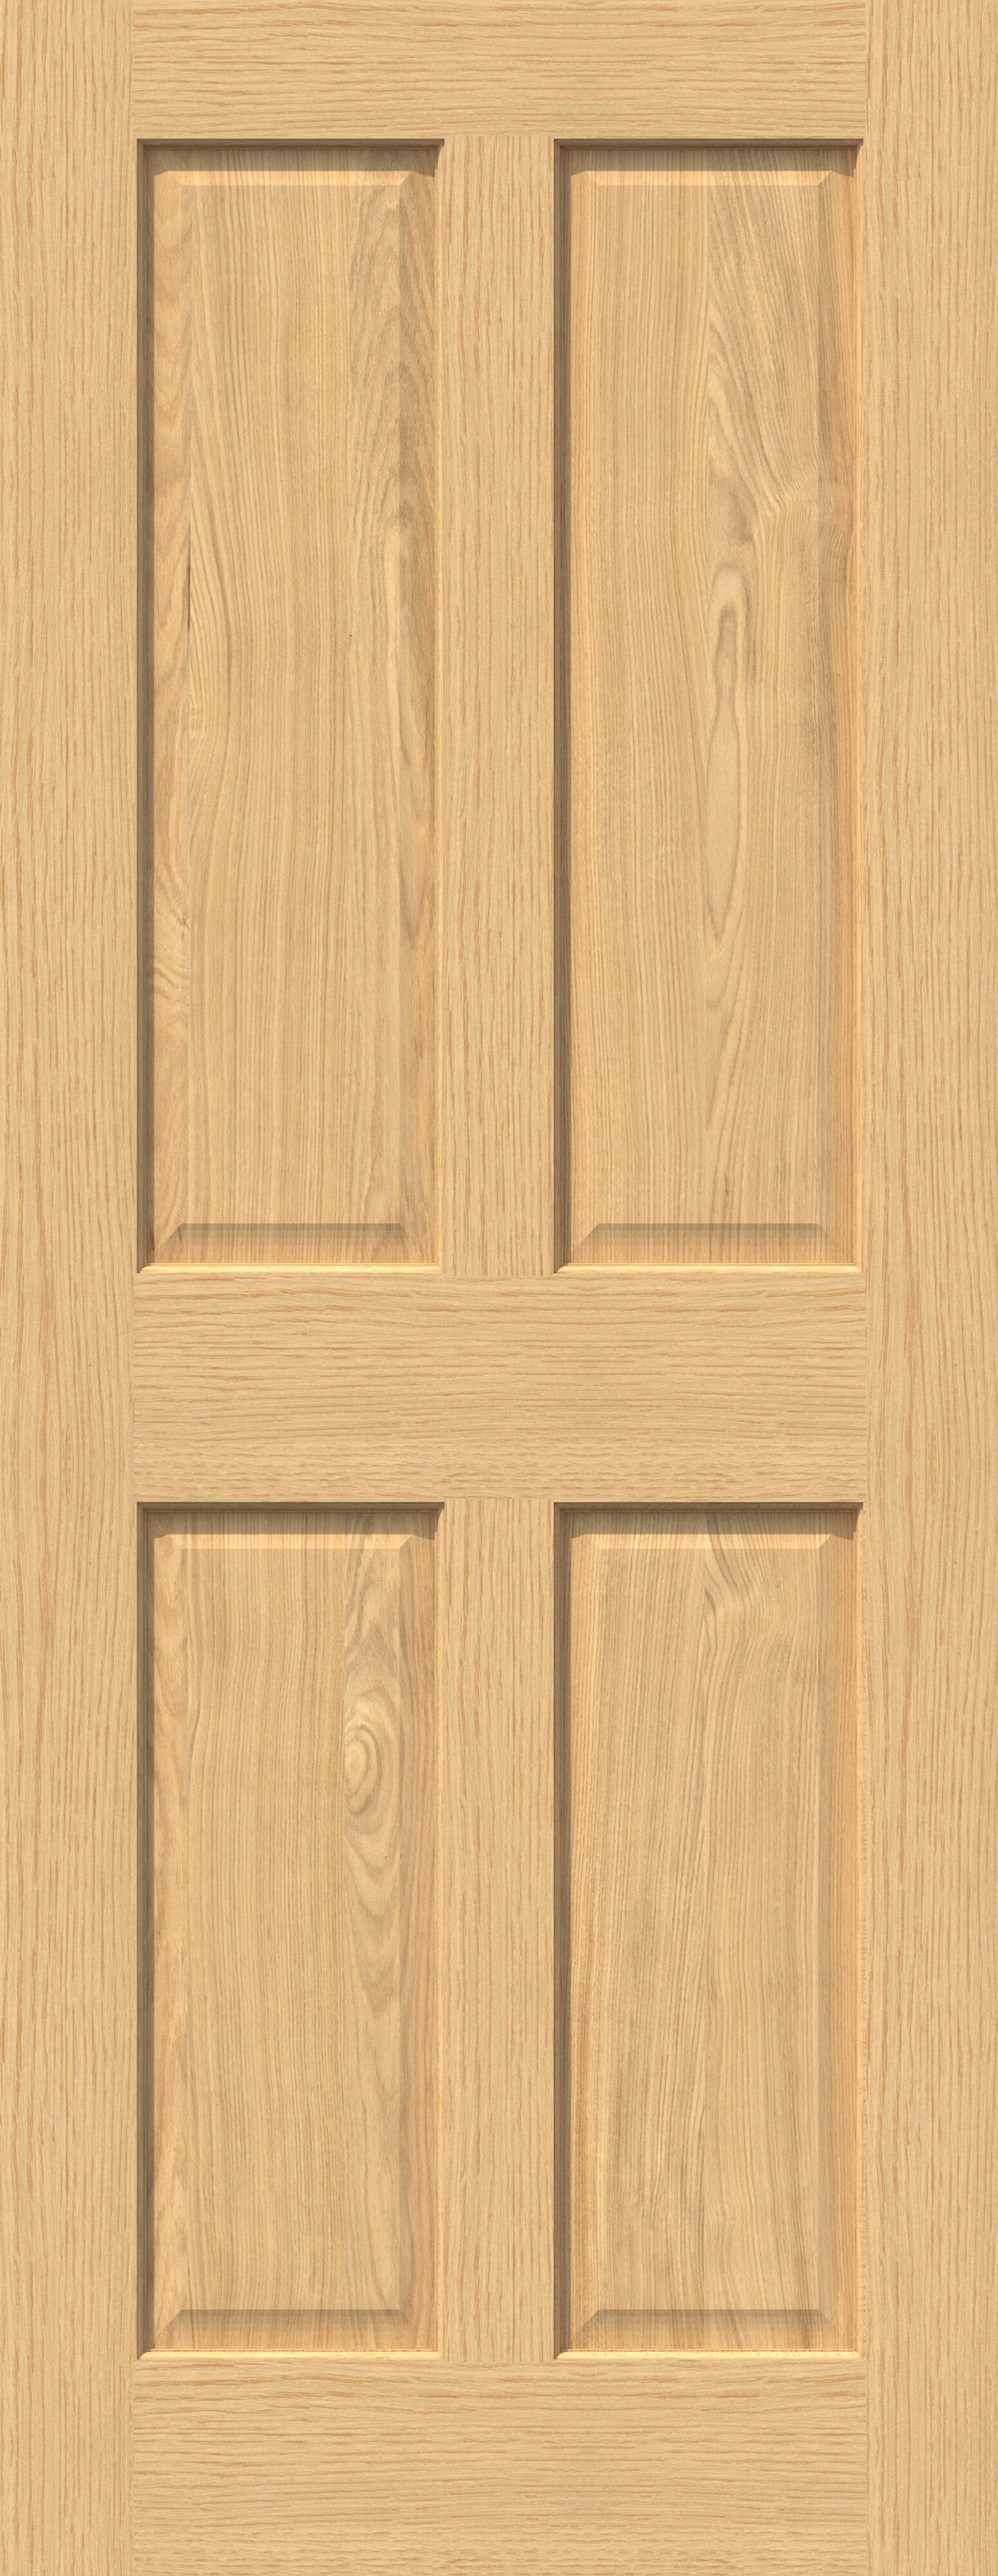 Traditional Victorian Oak 4 Panel Internal Doors At Express Doors Direct